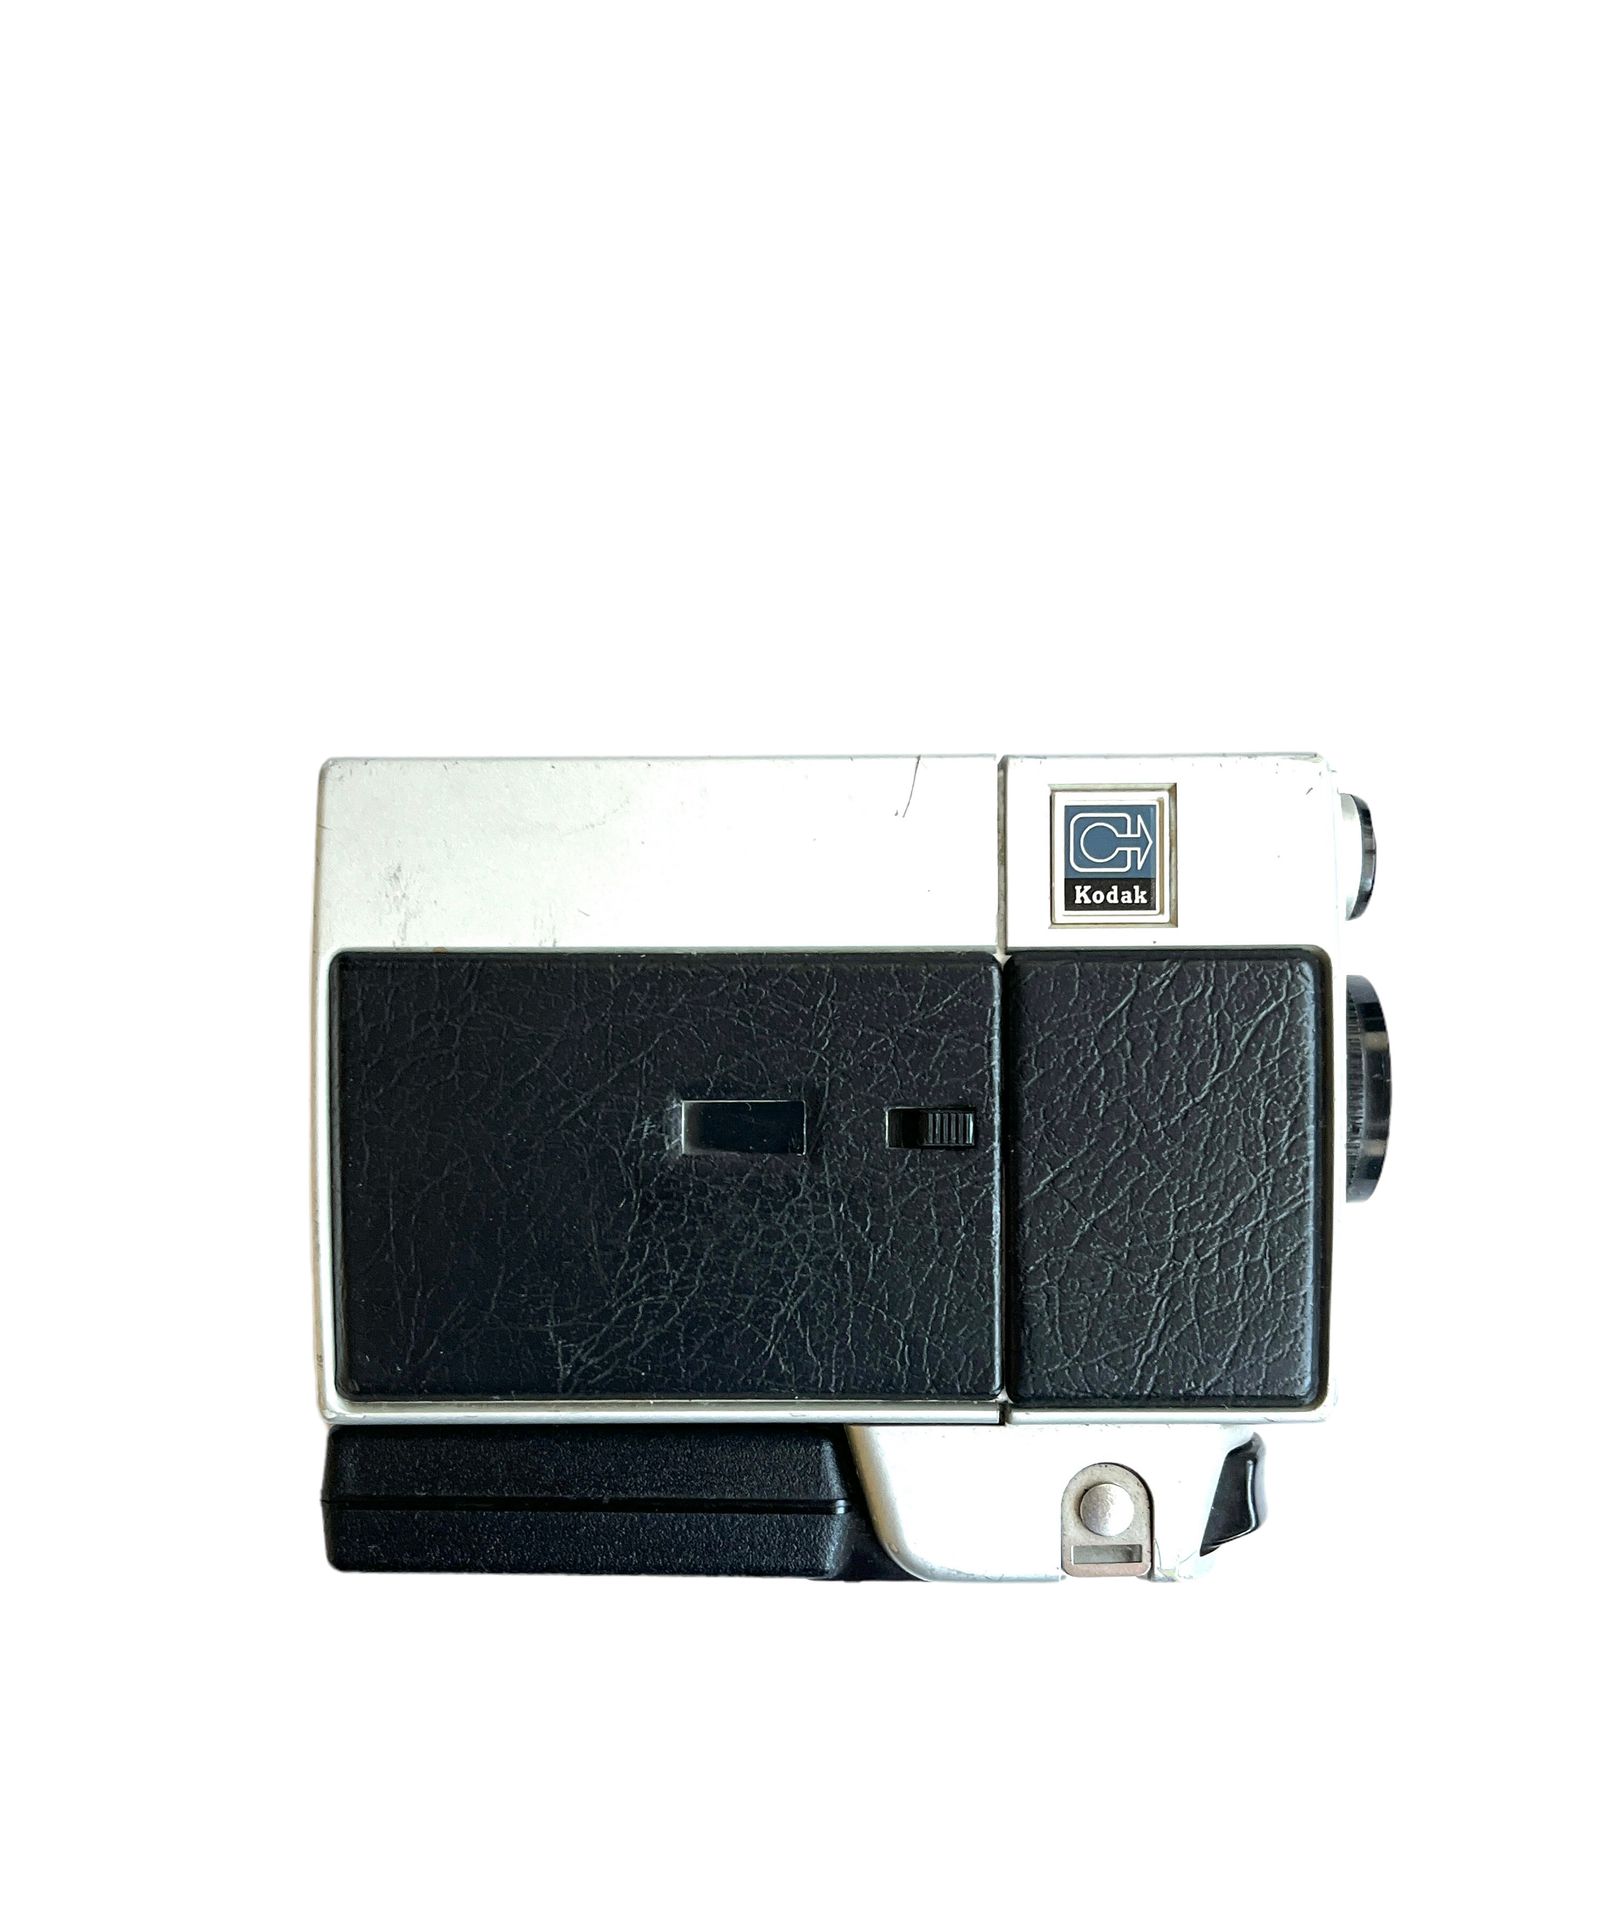 Null 在行李箱中，杂物集。柯达皇家杂志胶片相机（P. Angenieux镜头），柯达波纹管相机，一台柯达Instamatic M24相机和配件。